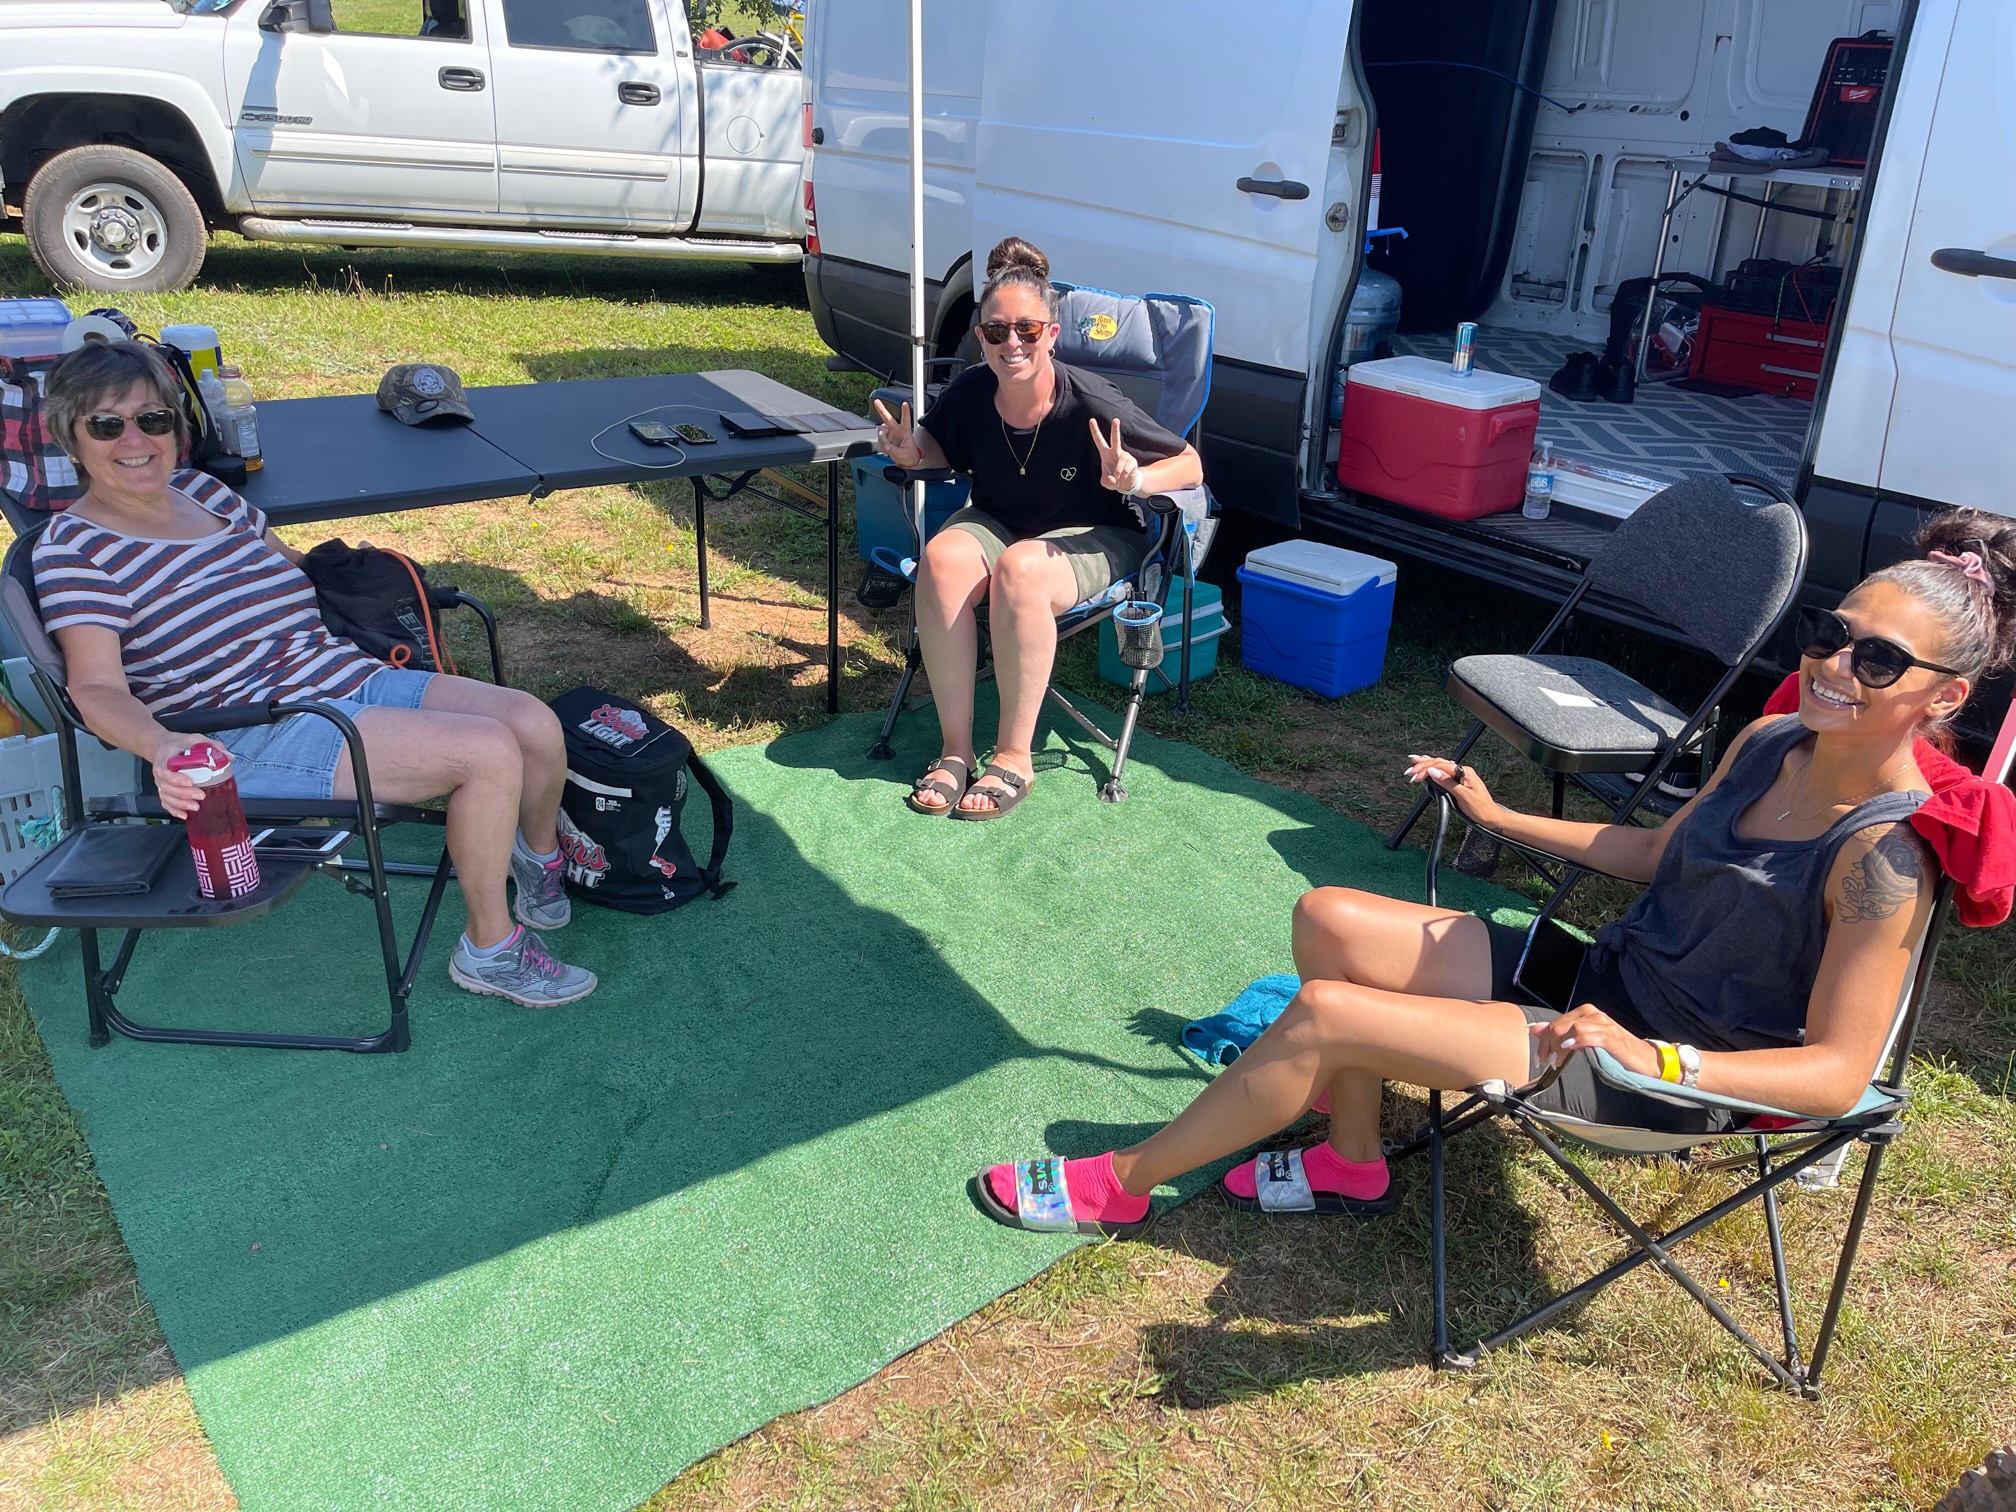 Three women under a tent next to a camper trailer